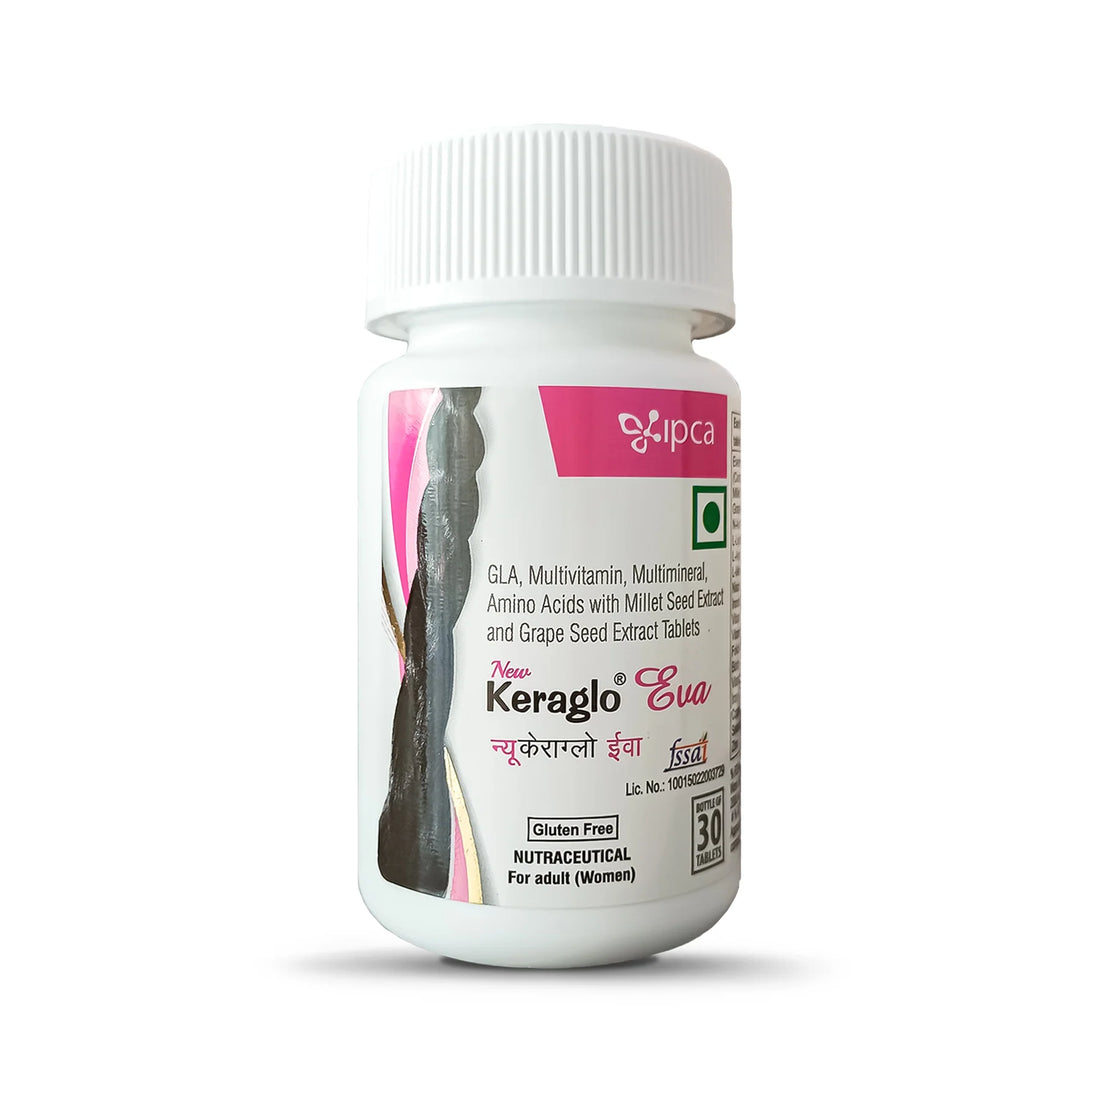 Keraglo Eva - Hair Fall Treatment (30 Tablets)